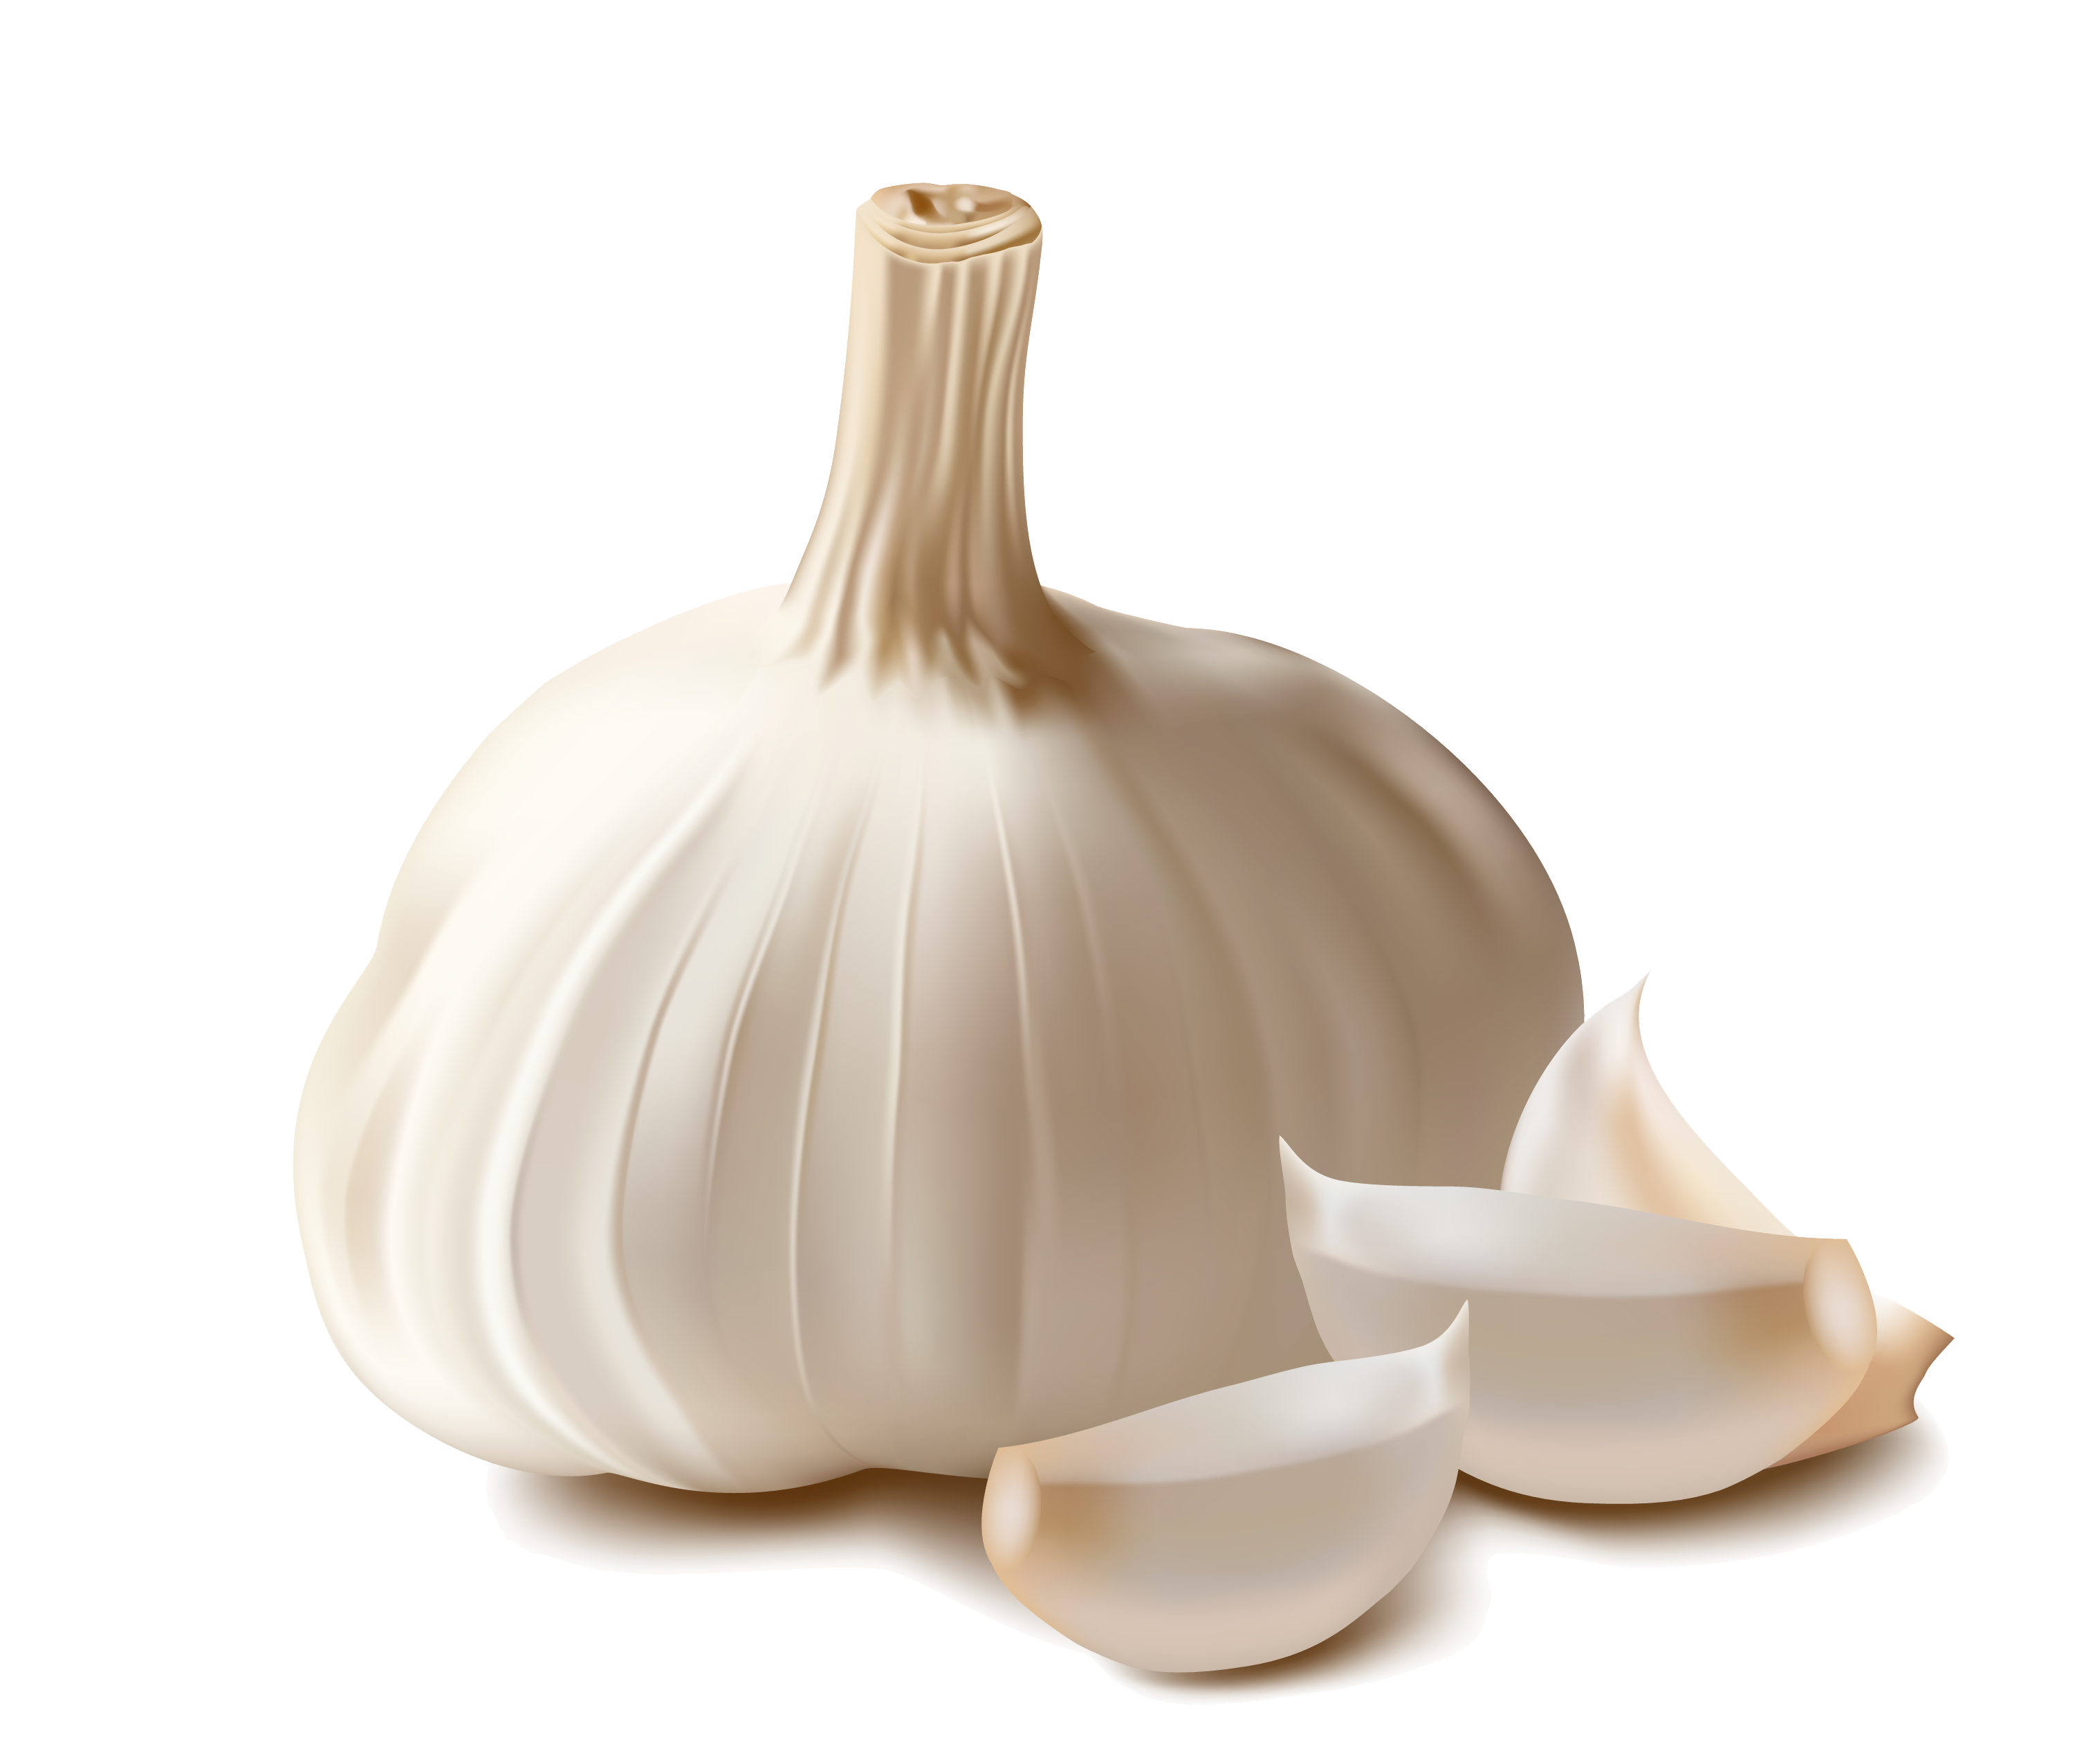 Png image purepng free. Onion clipart garlic onion